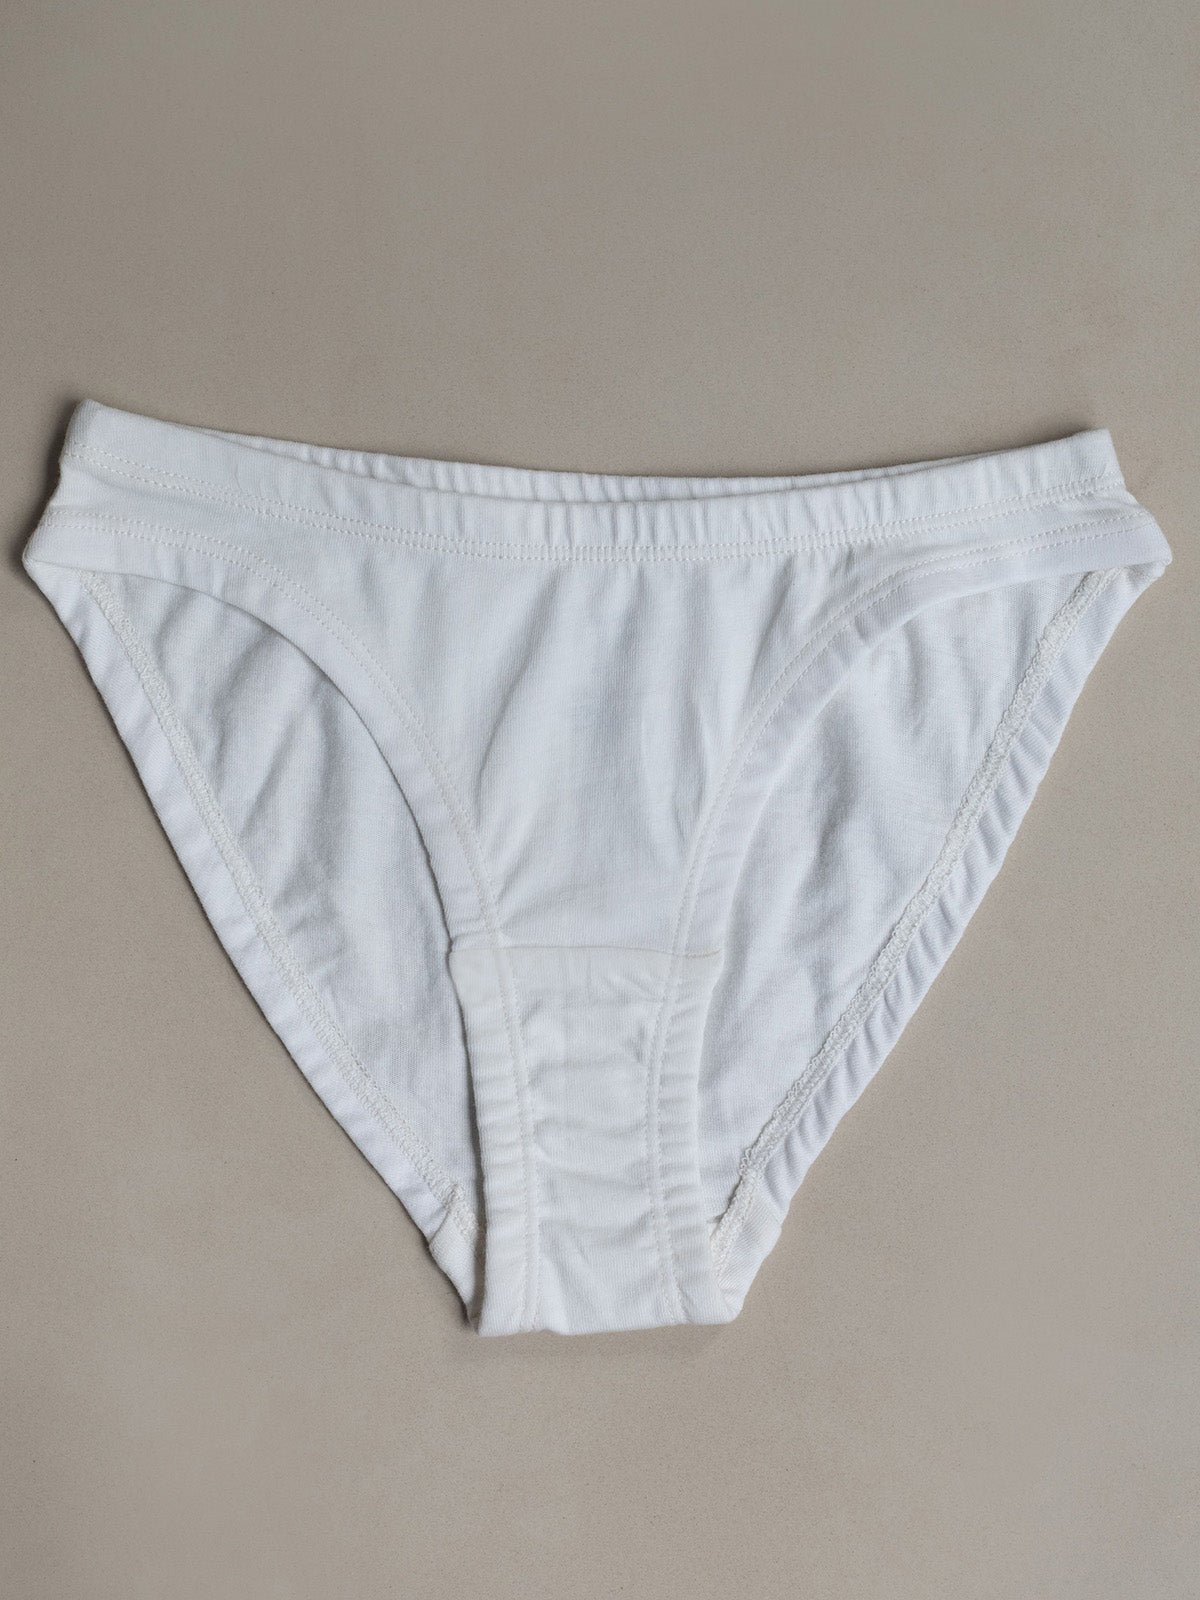 100% Organic Cotton Women's Drawstring Elastic Free Panties - High Waisted Cotton  Brief Panties - 2 Pack